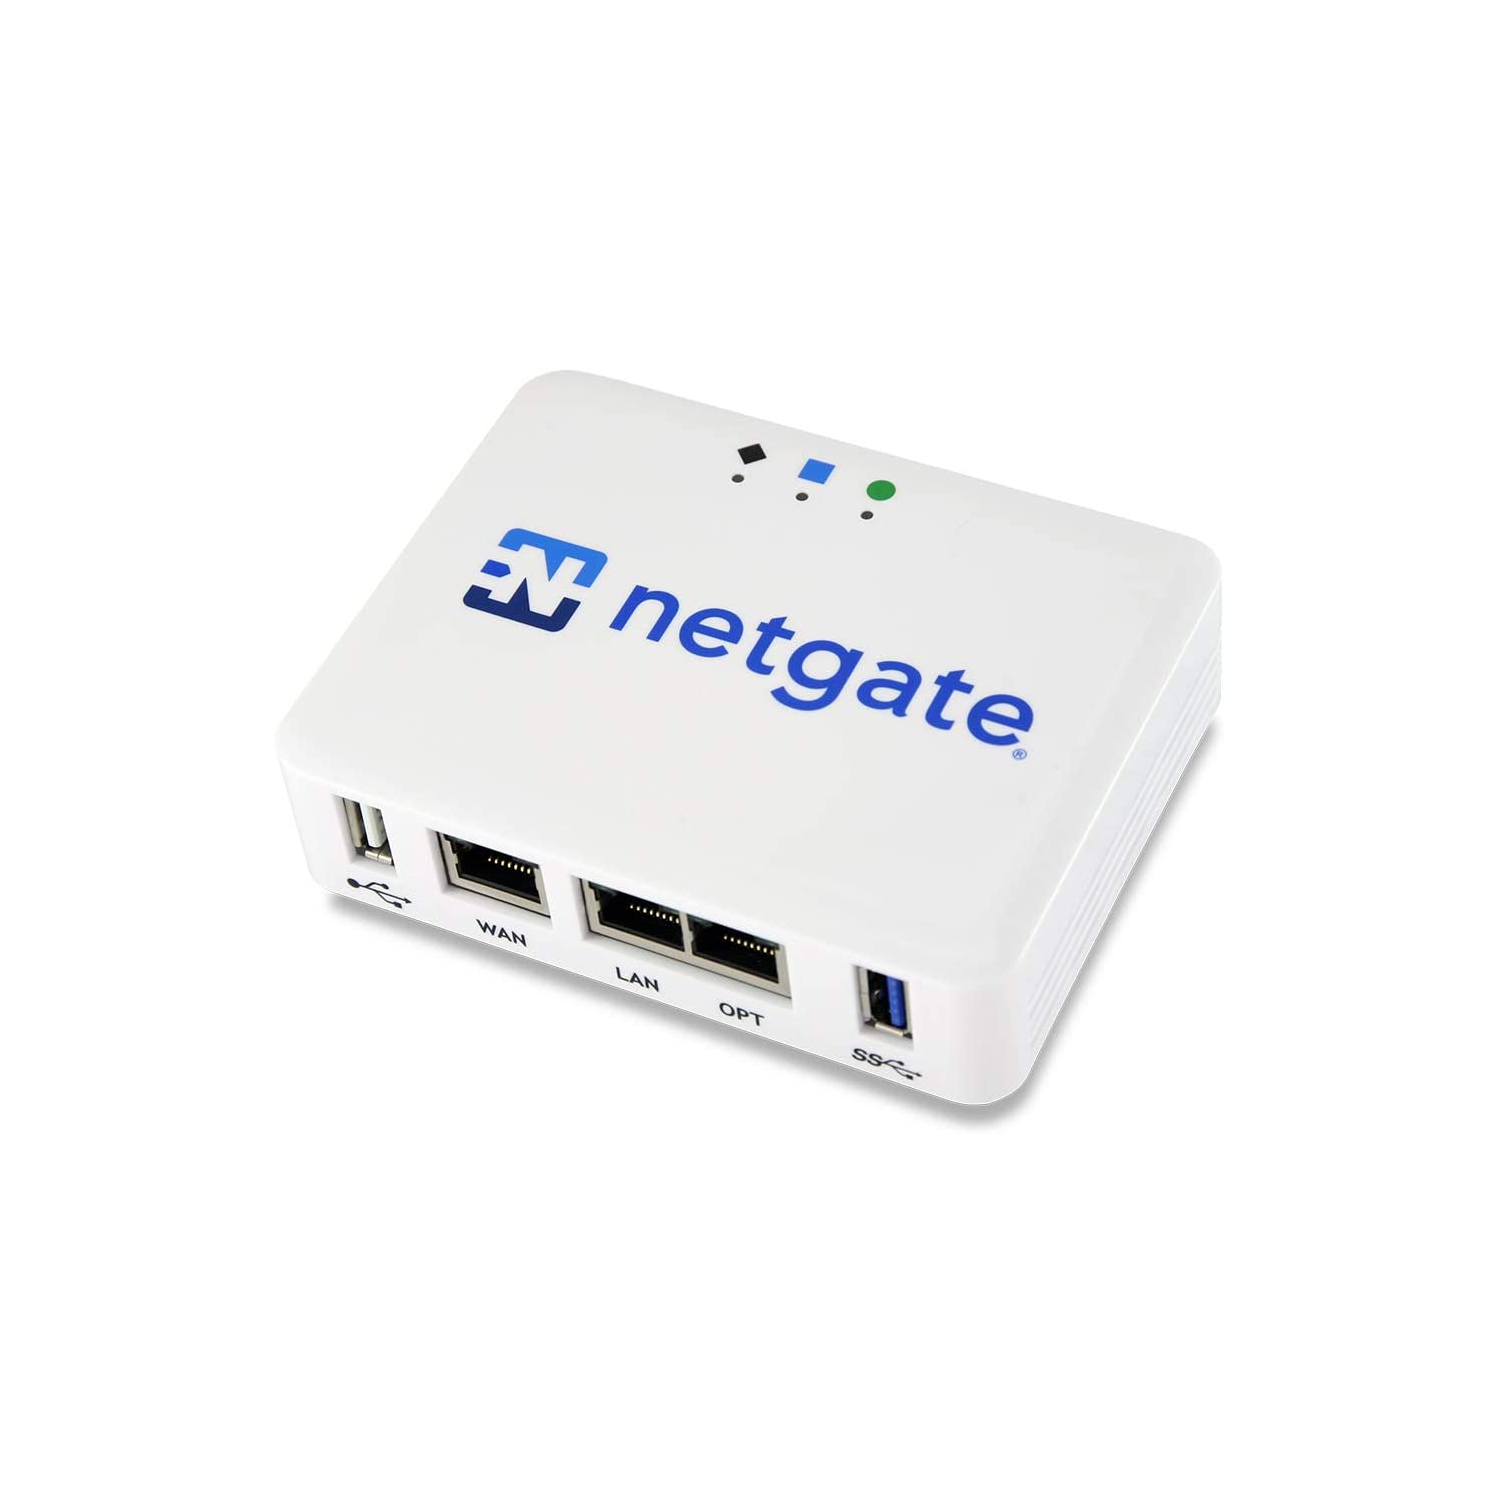 Netgate SG-1100 Security Gateway Appliance with pfSense Software